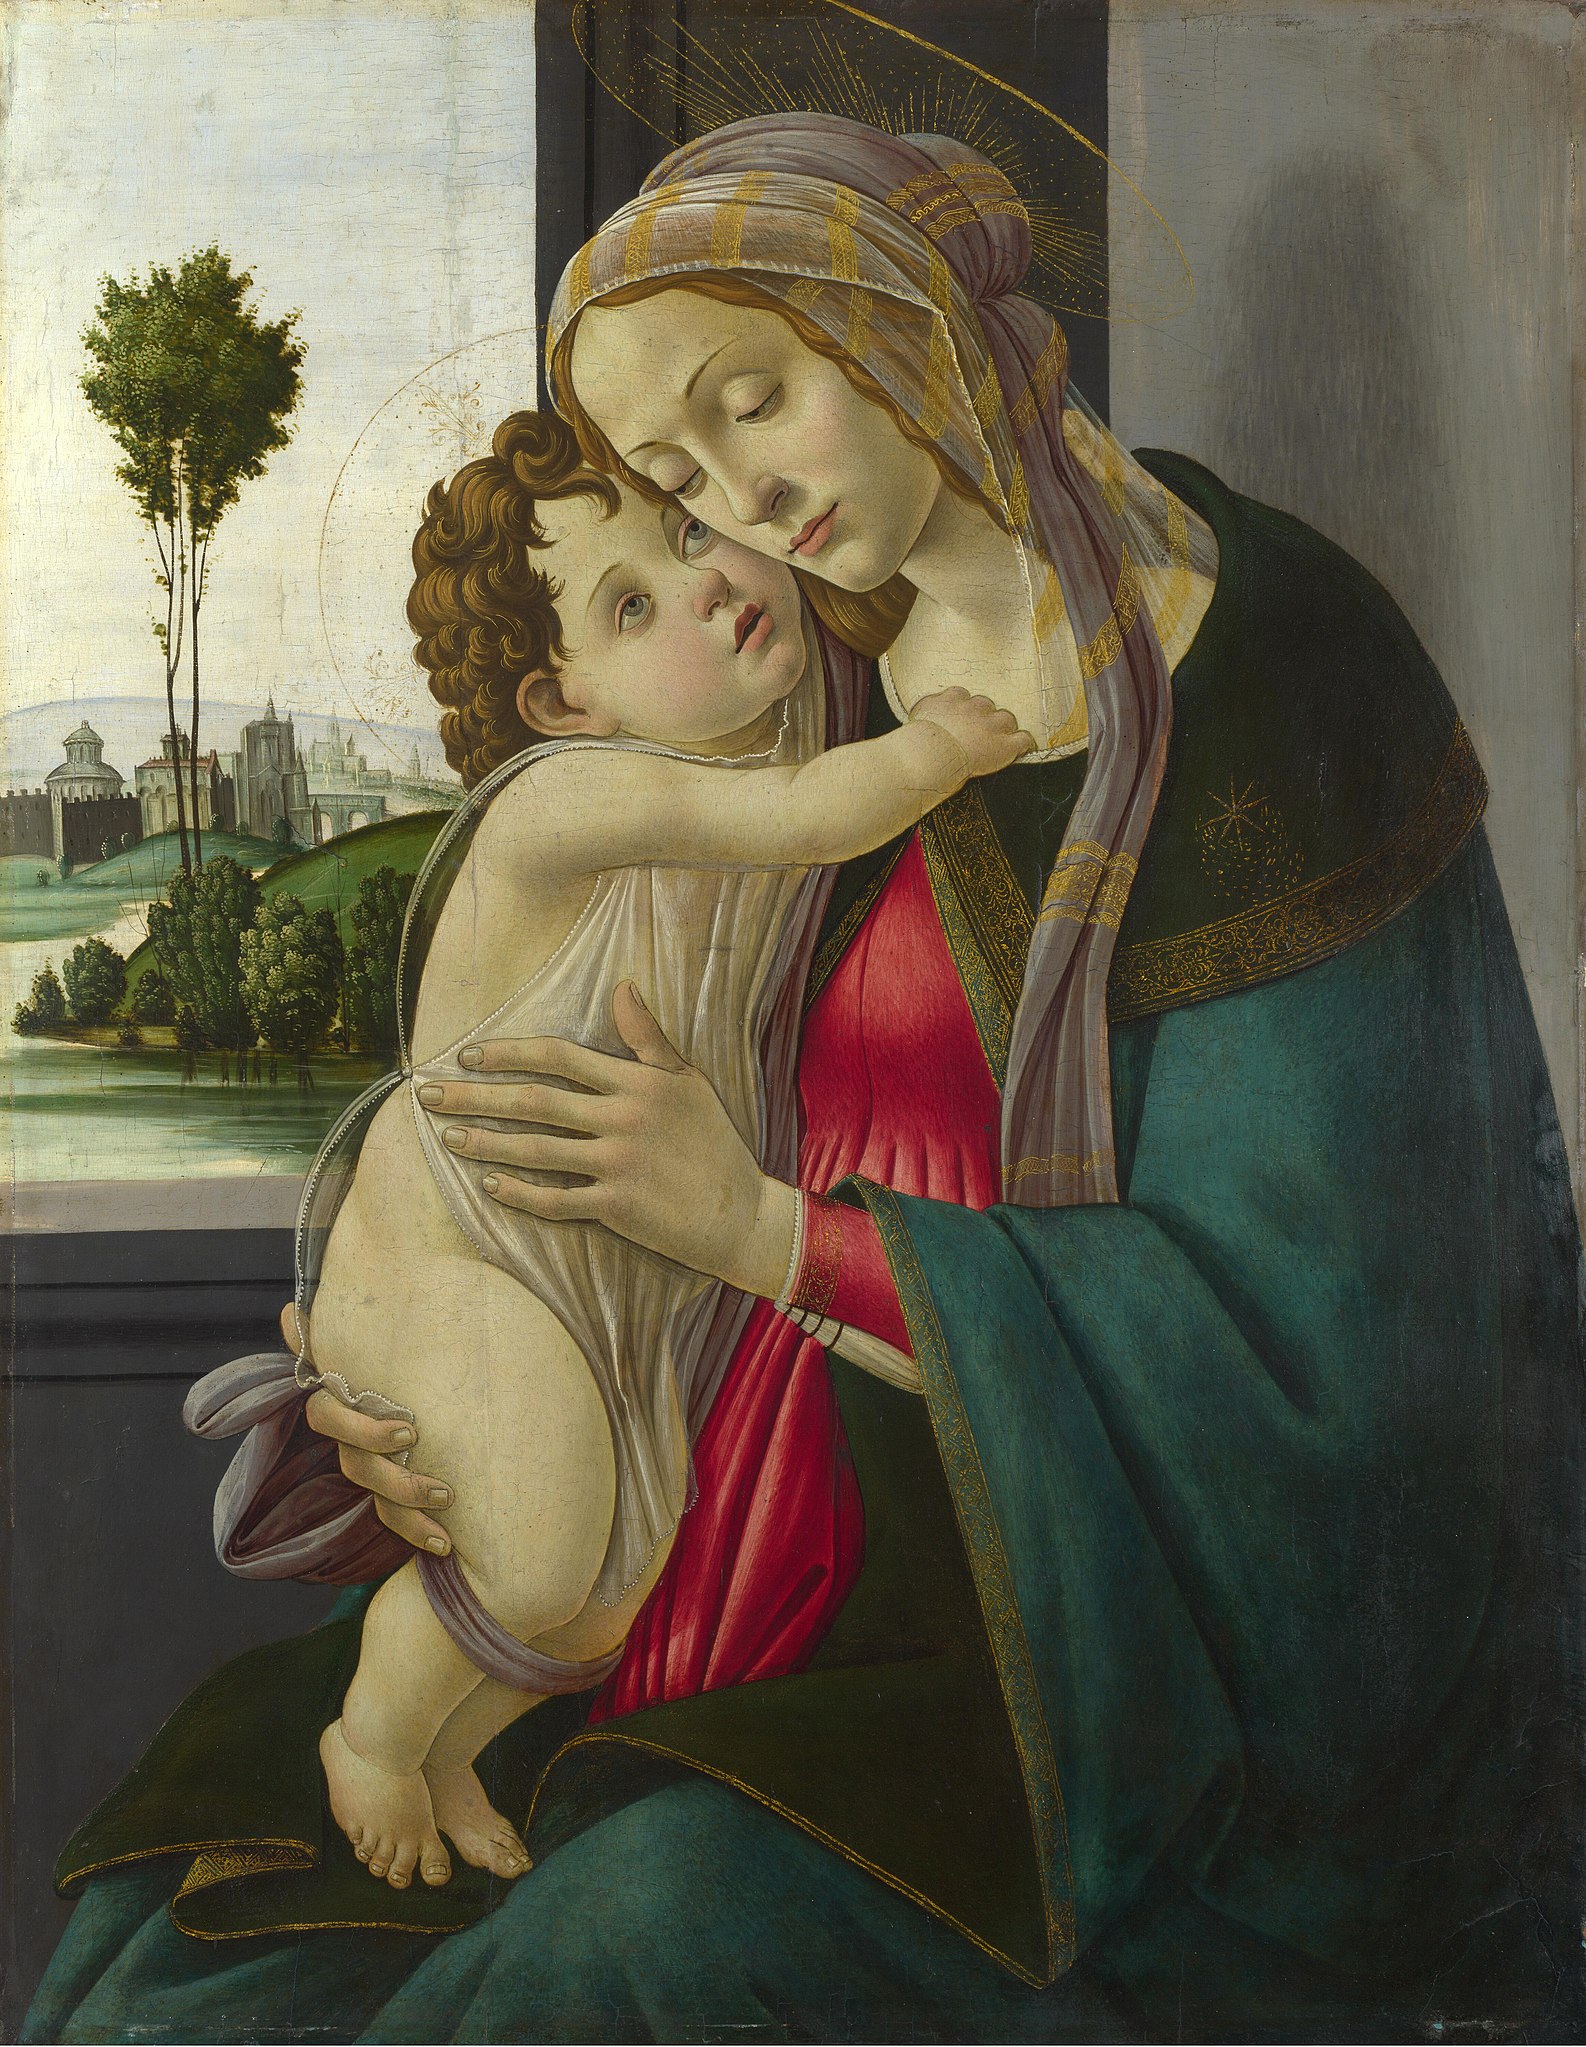 Sandro Botticelli (Workshop) - 15th century